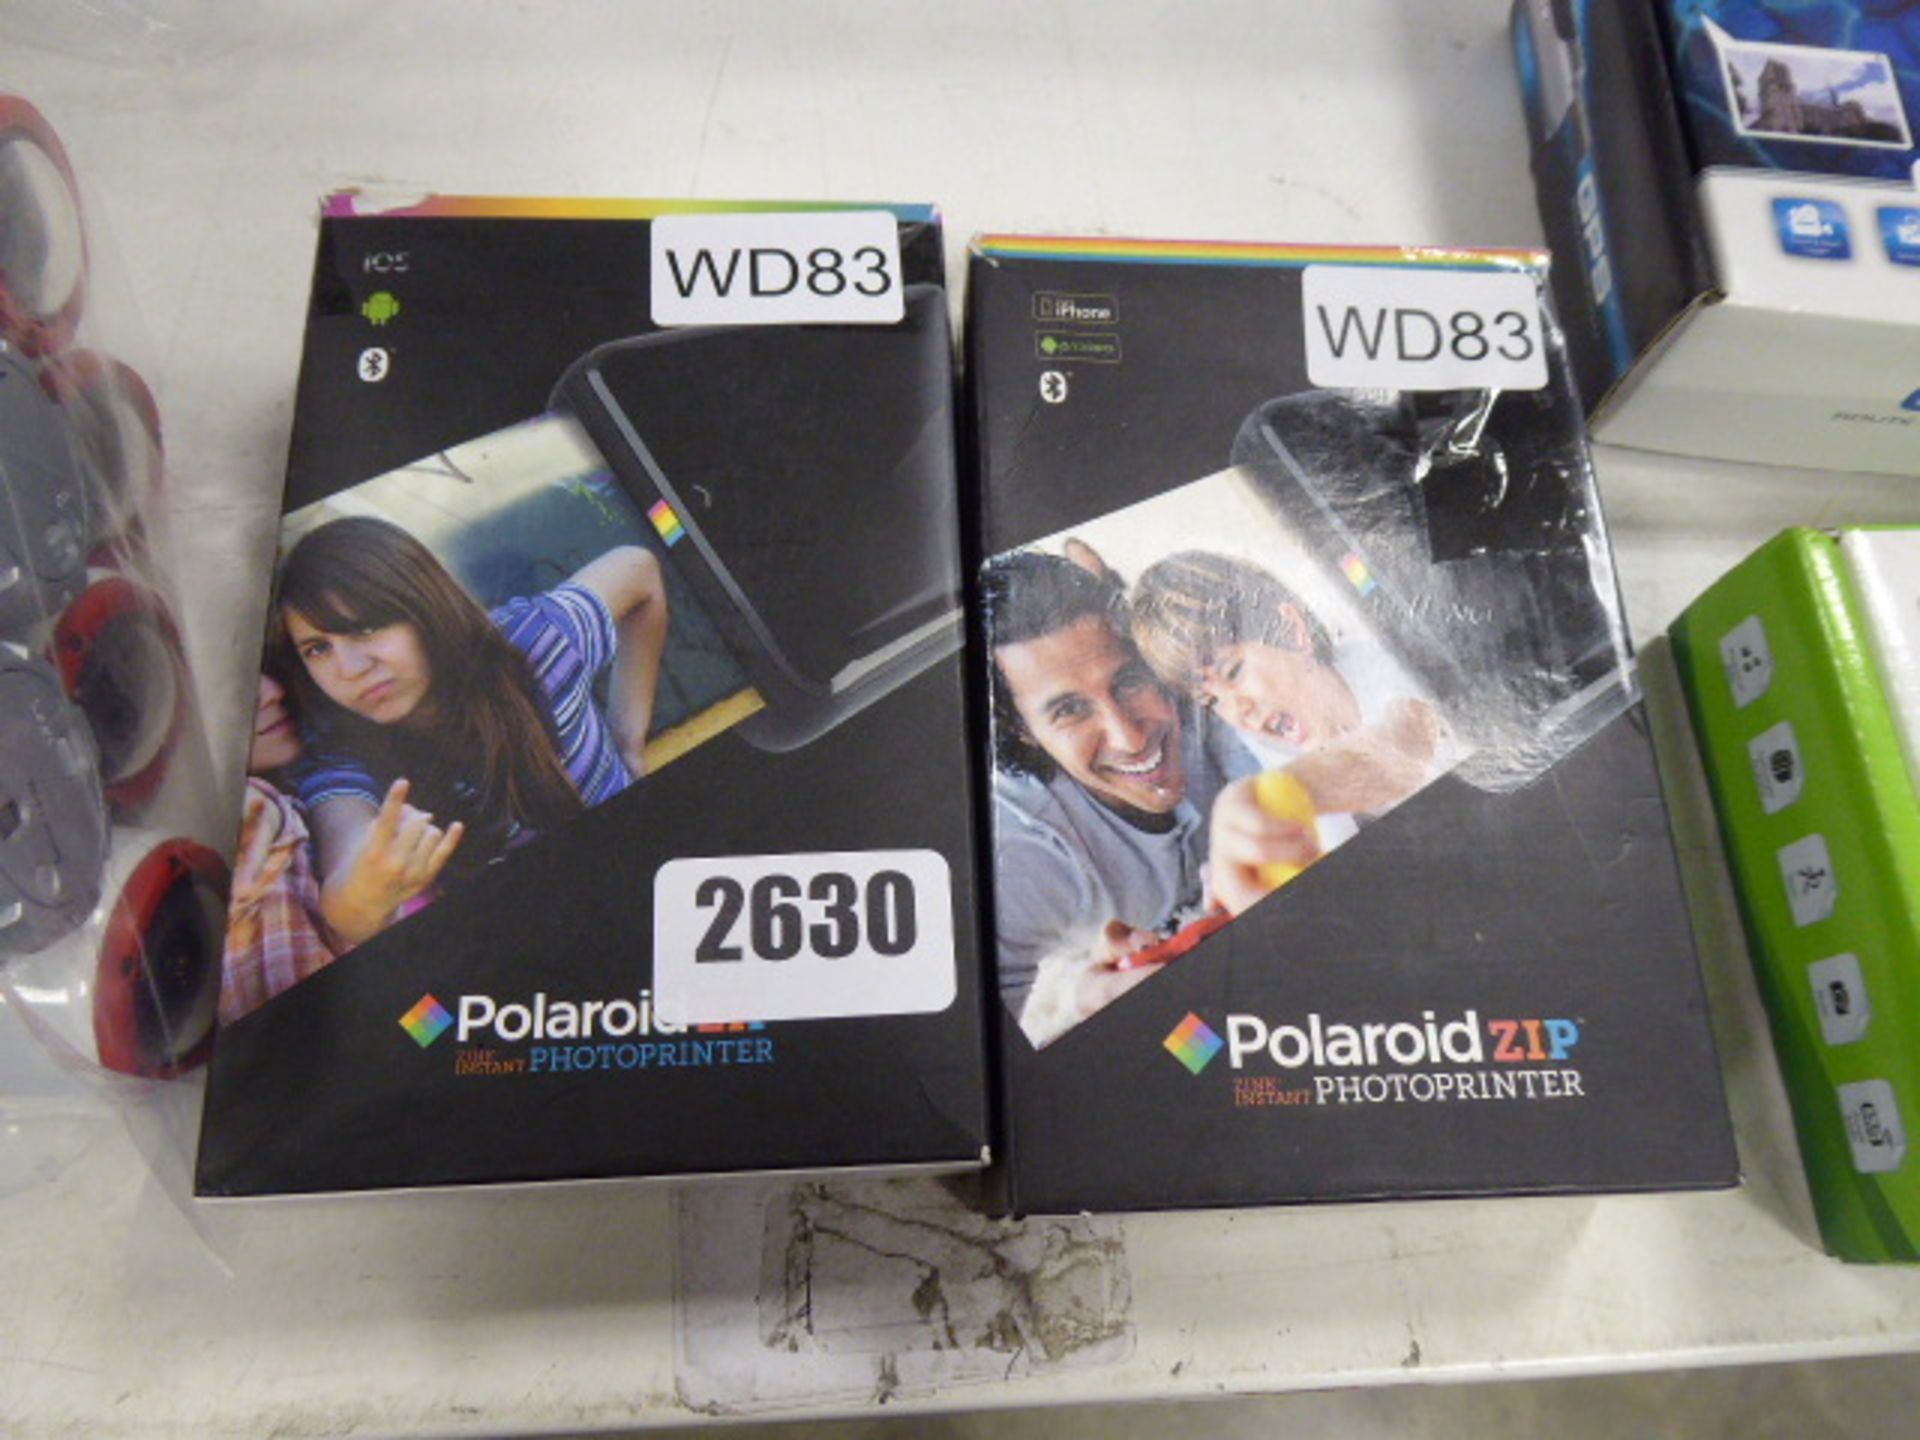 Polariod Zip photo printer in box